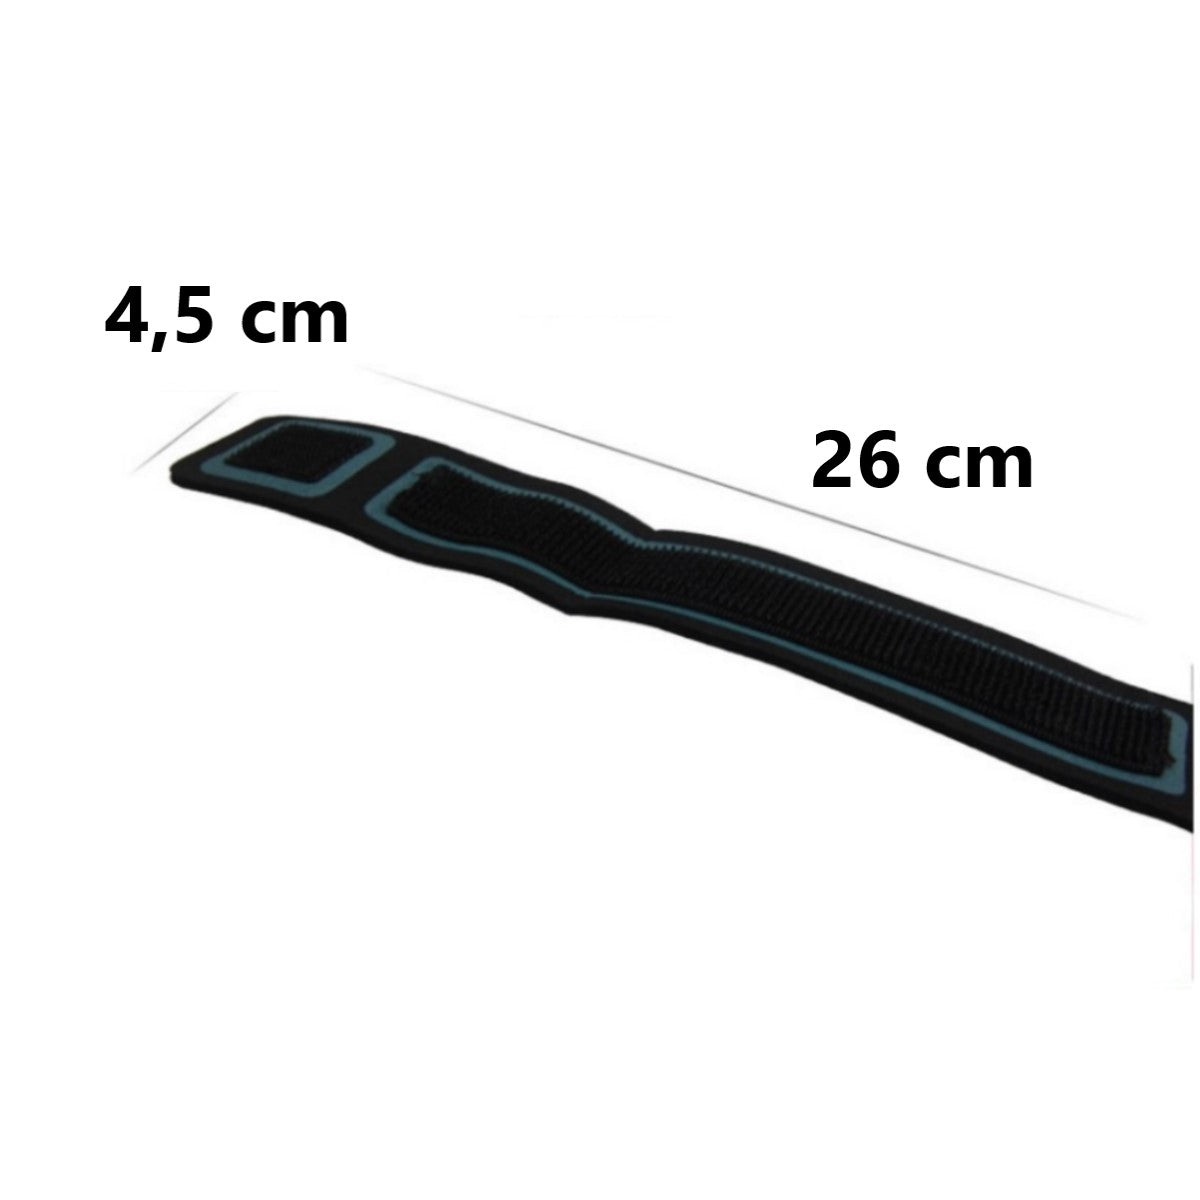 Armband für OnePlus Nord CE 2 Lite 5G Sportarmband Handy Tasche Fitness Jogging Handyhülle